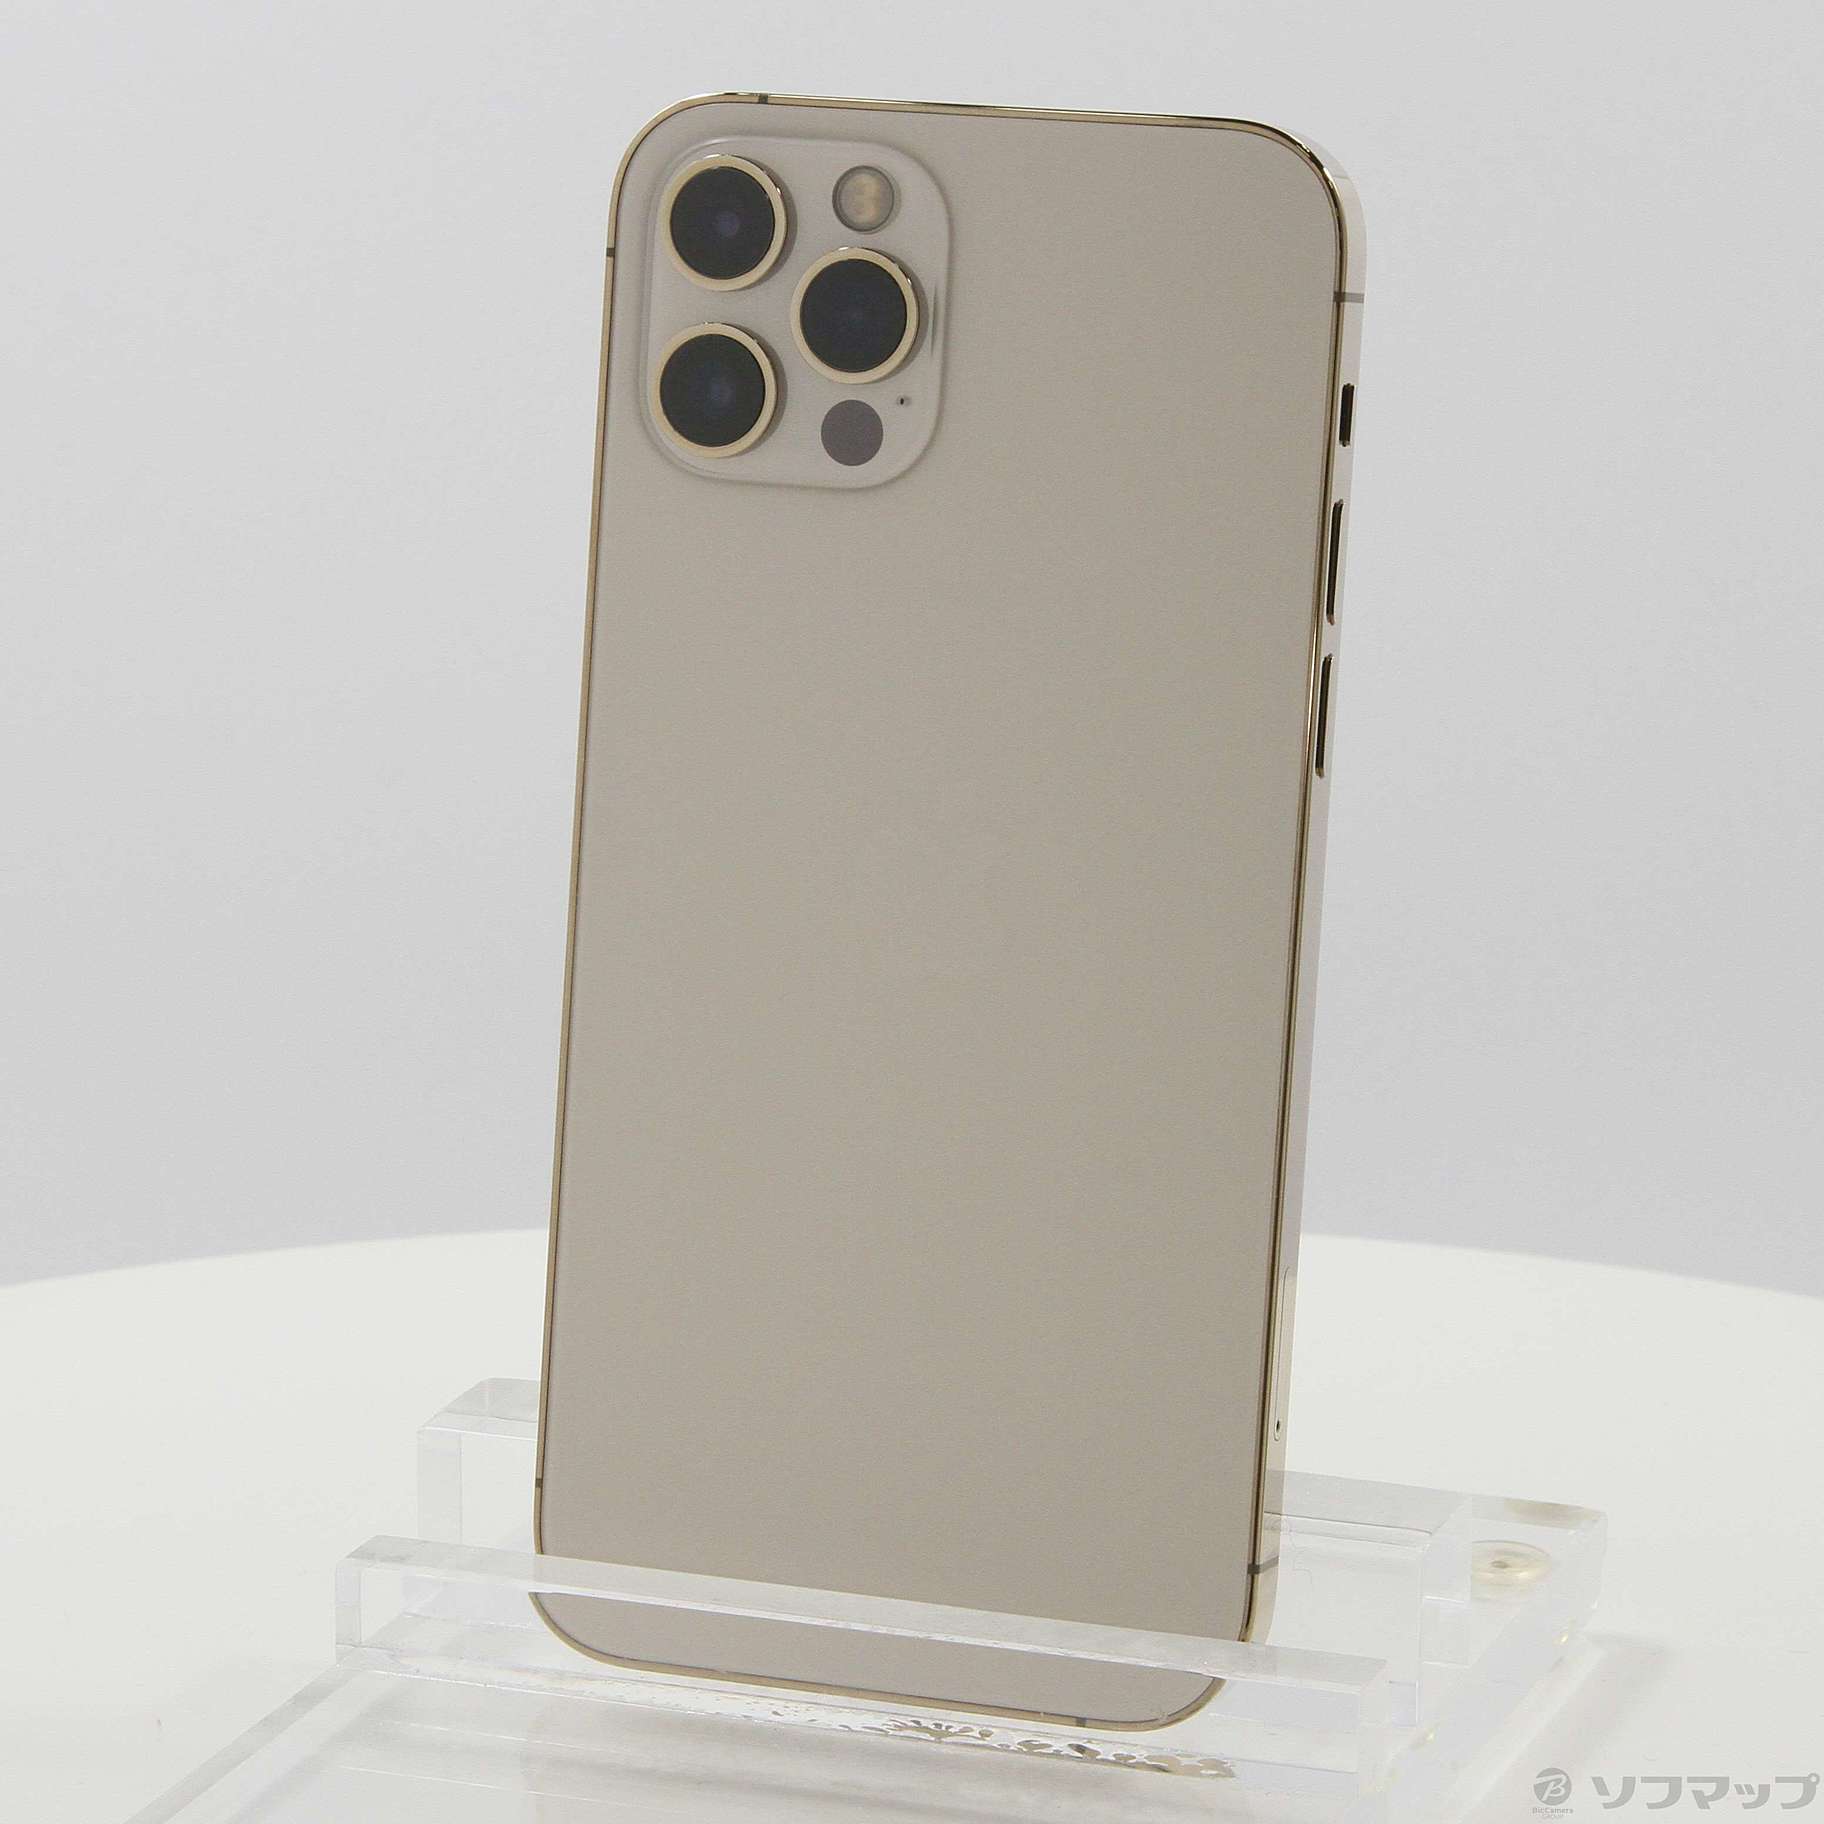 iPhone 12 Pro 512GB SIMフリー [ゴールド] 中古(白ロム)価格比較